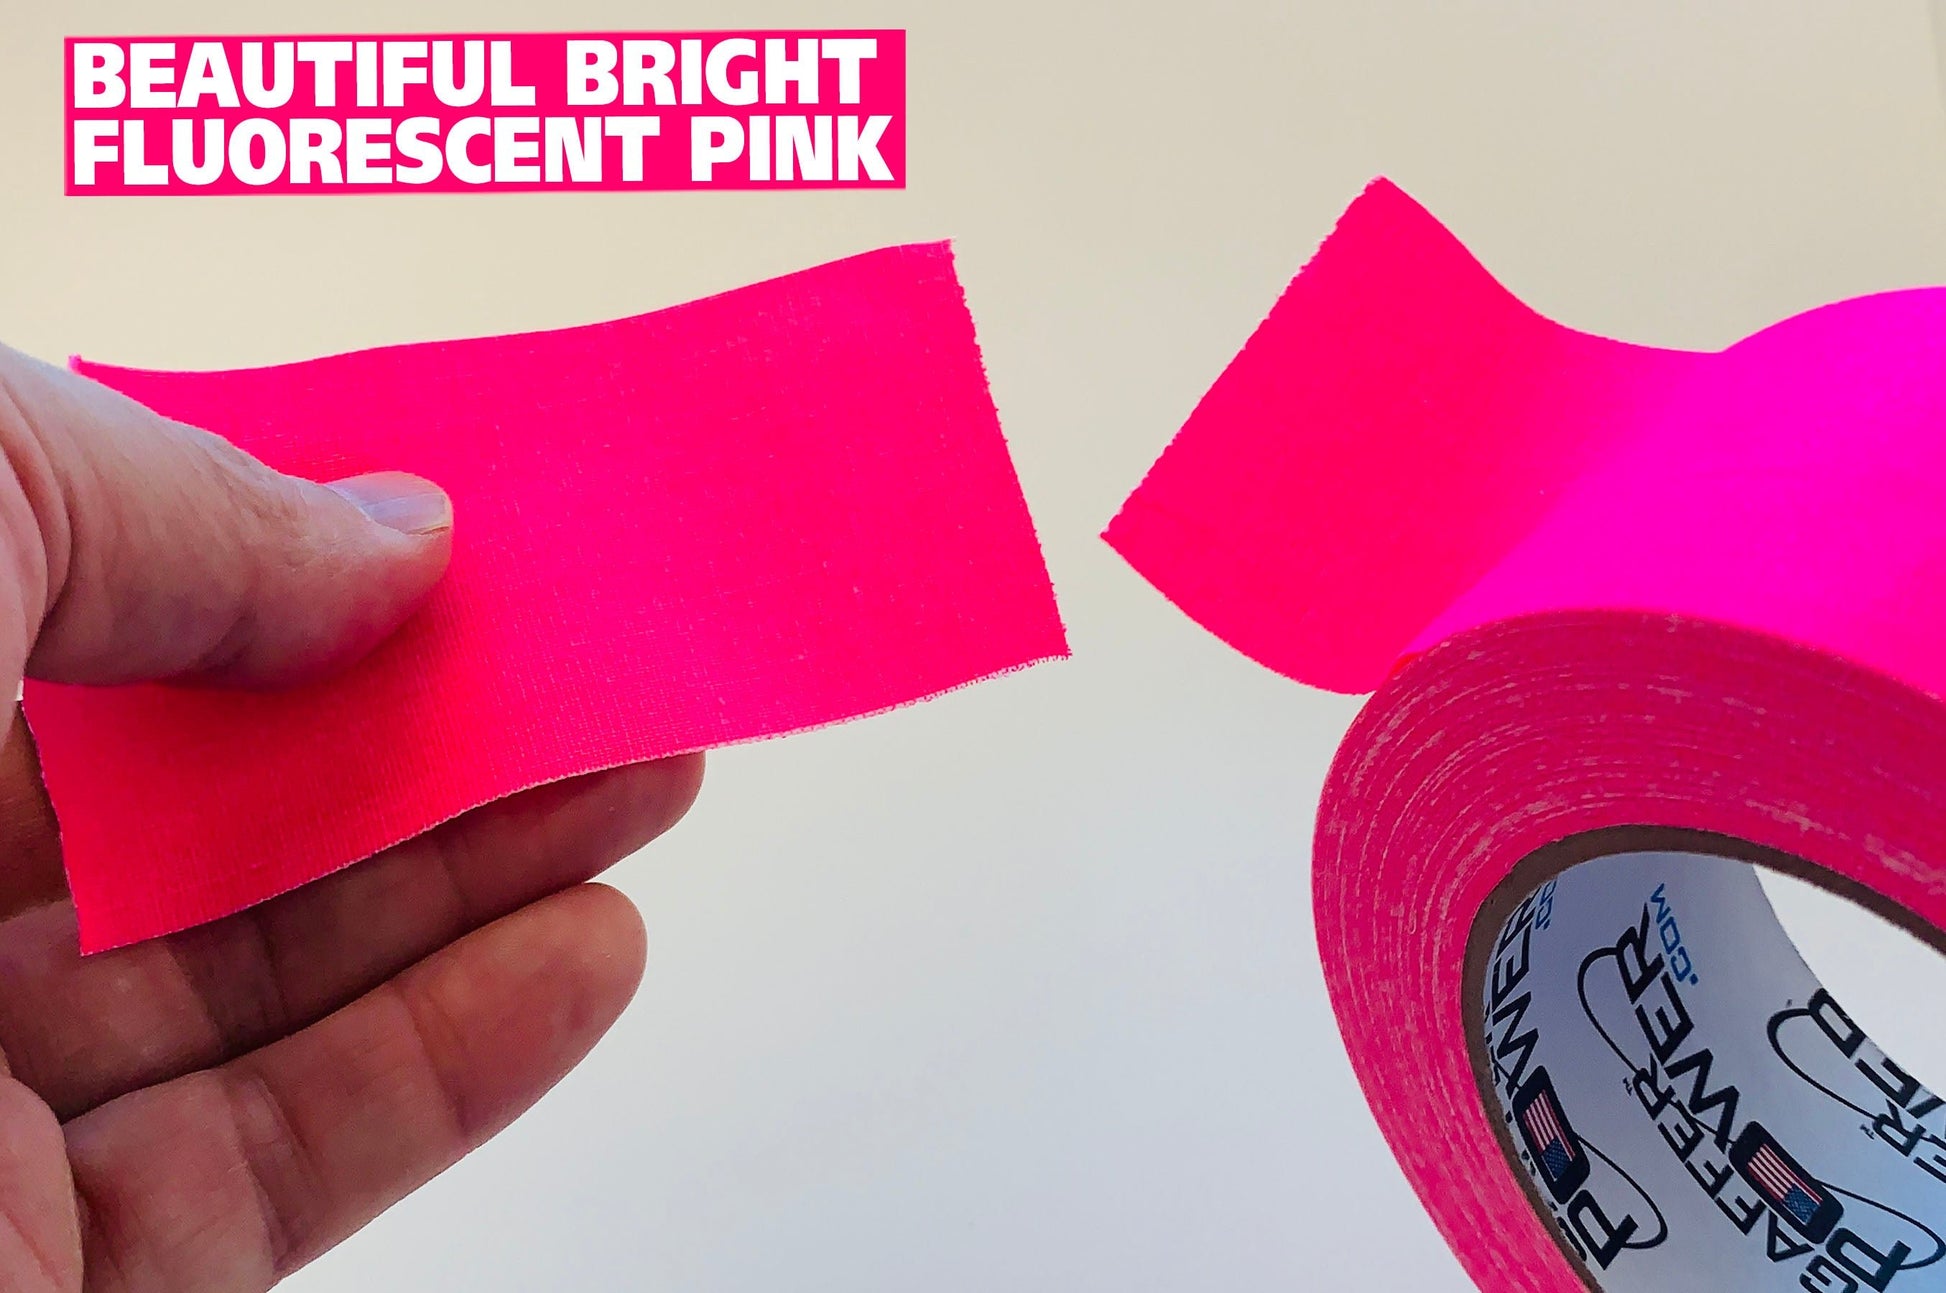 Full Cases Fluorescent Pink Spike Tape